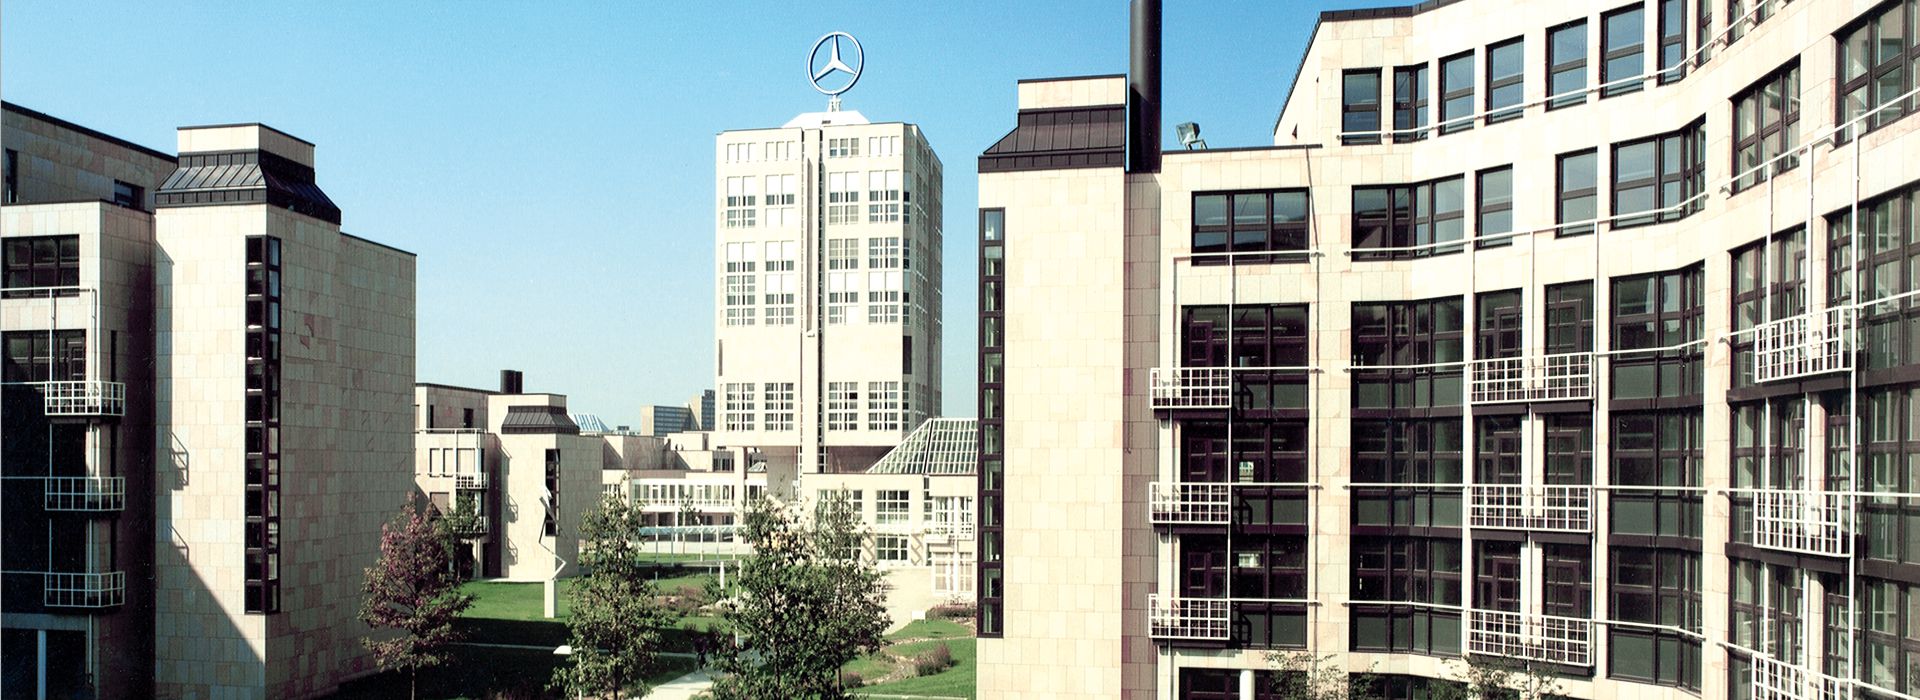 Daimler Hauptverwaltung, Stuttgart